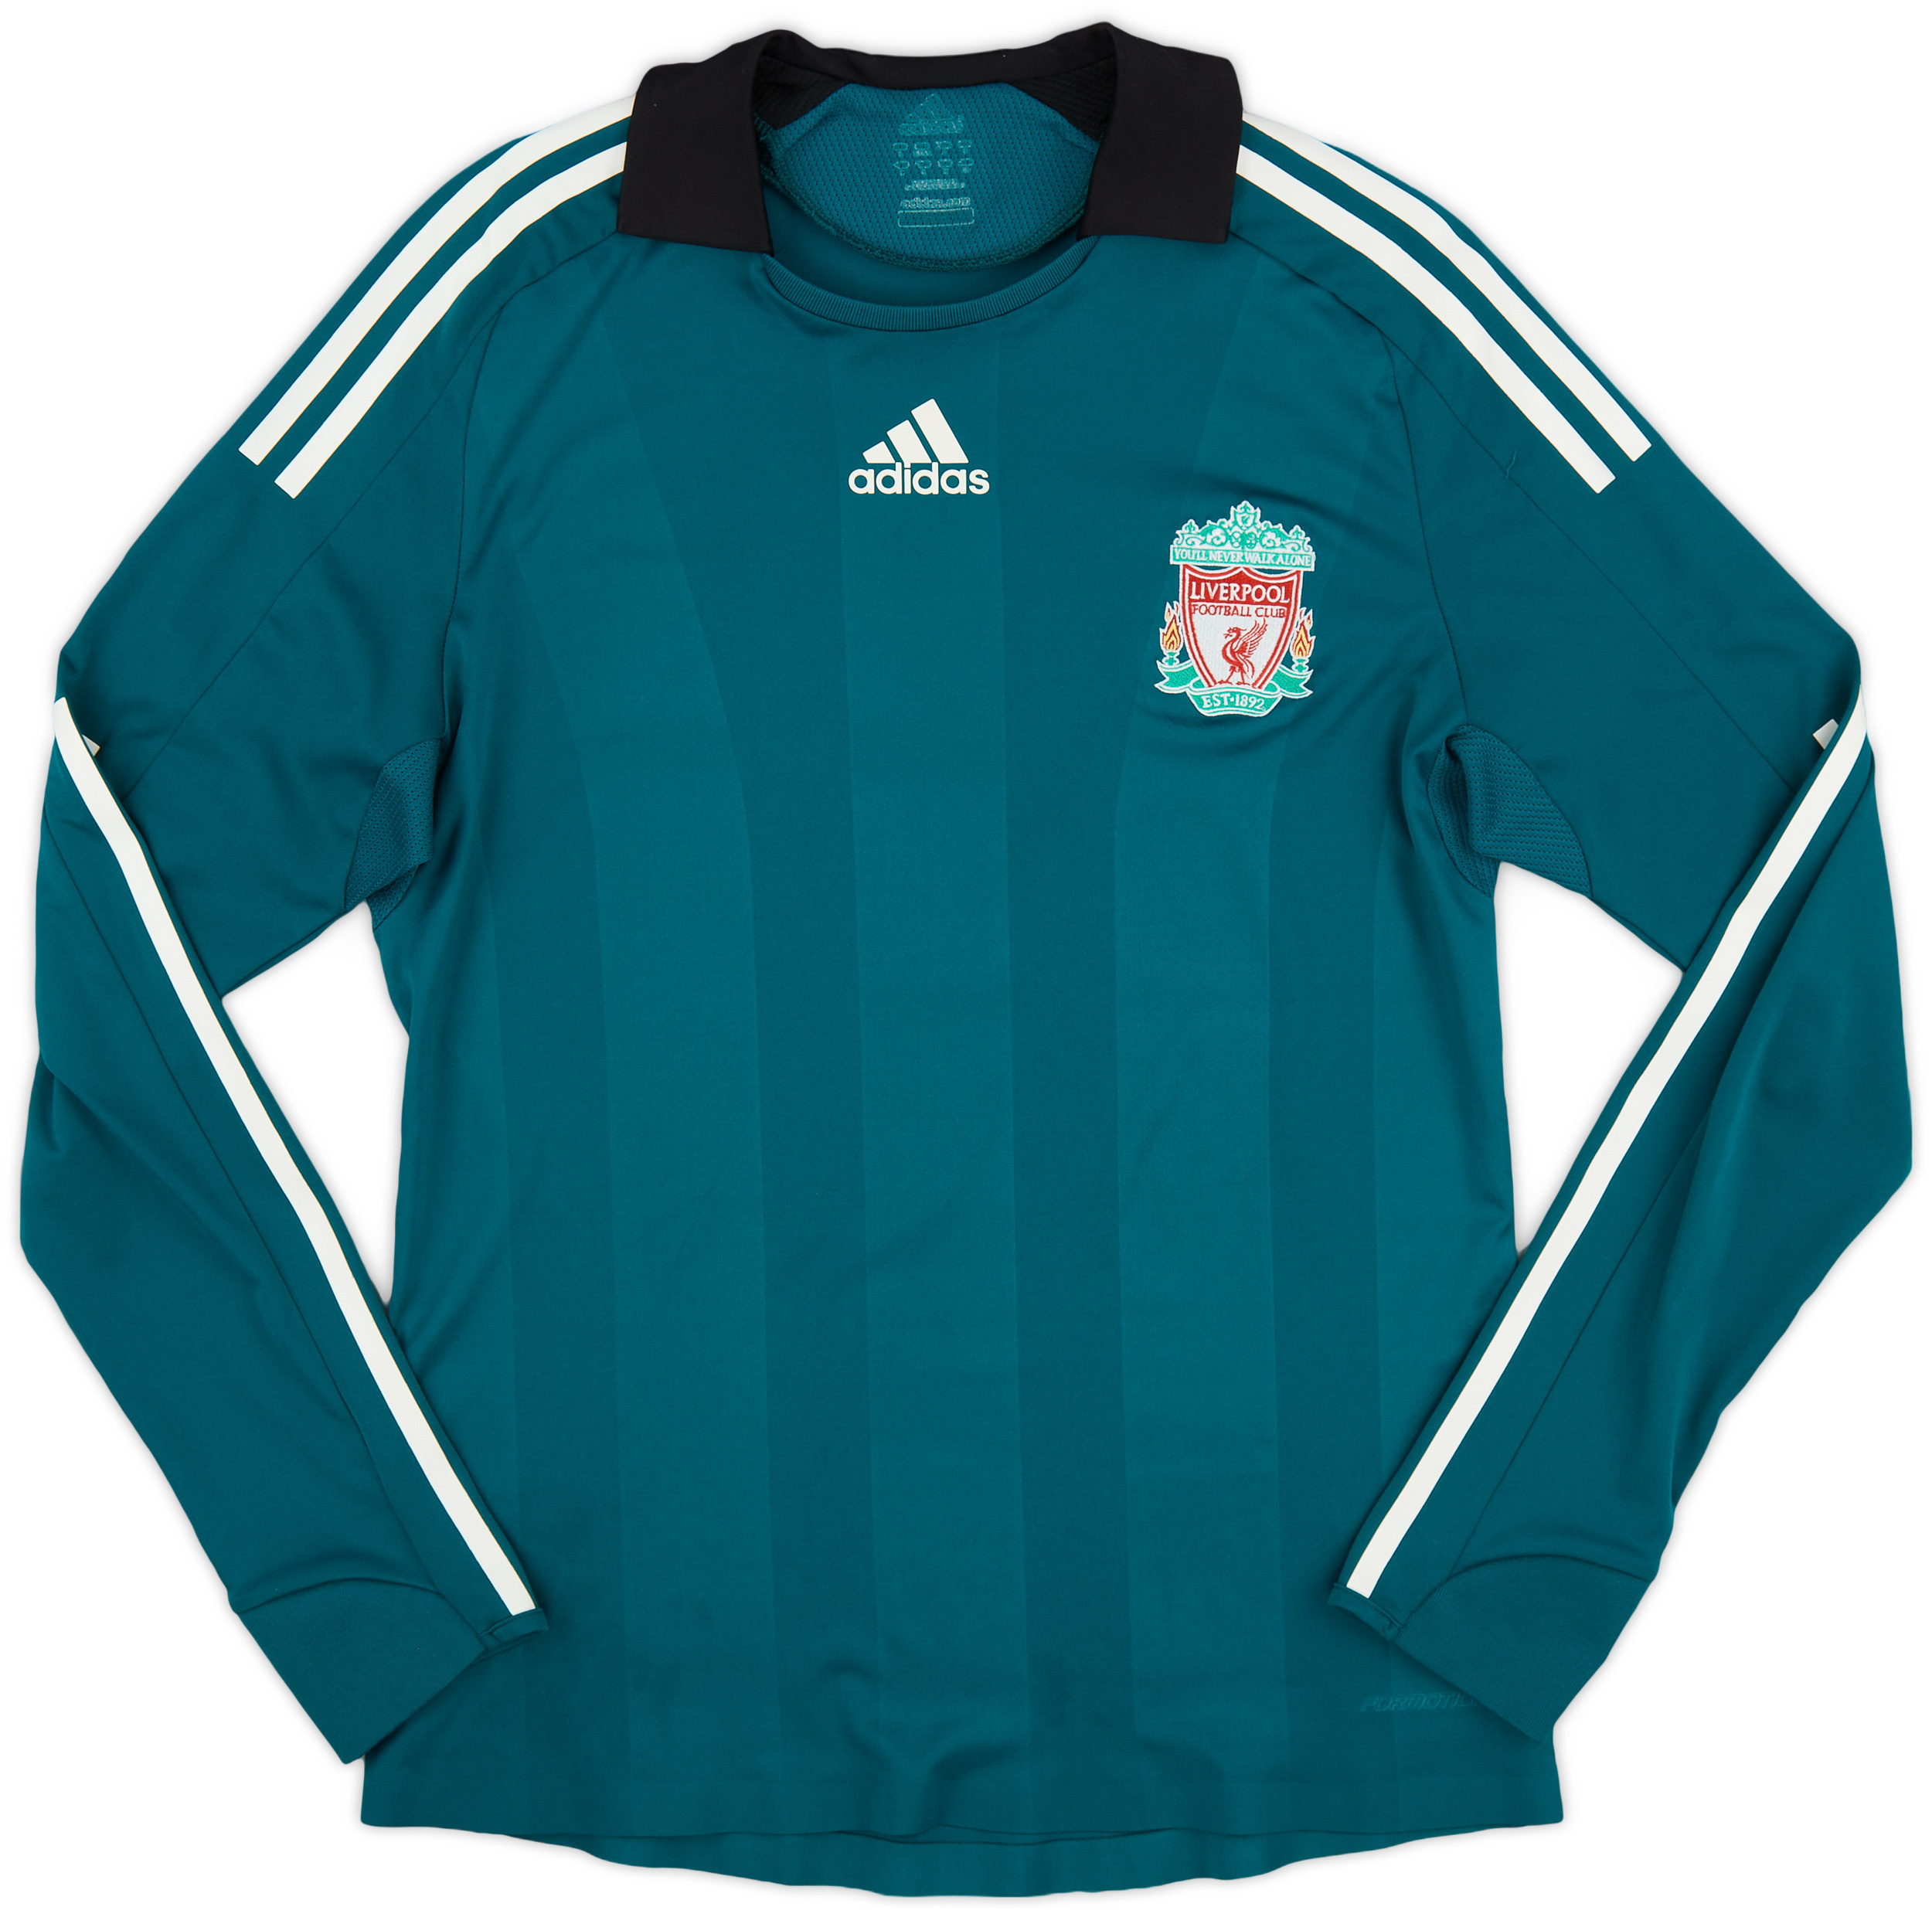 2008-09 Liverpool Player Issue Third Shirt - 5/10 - ()